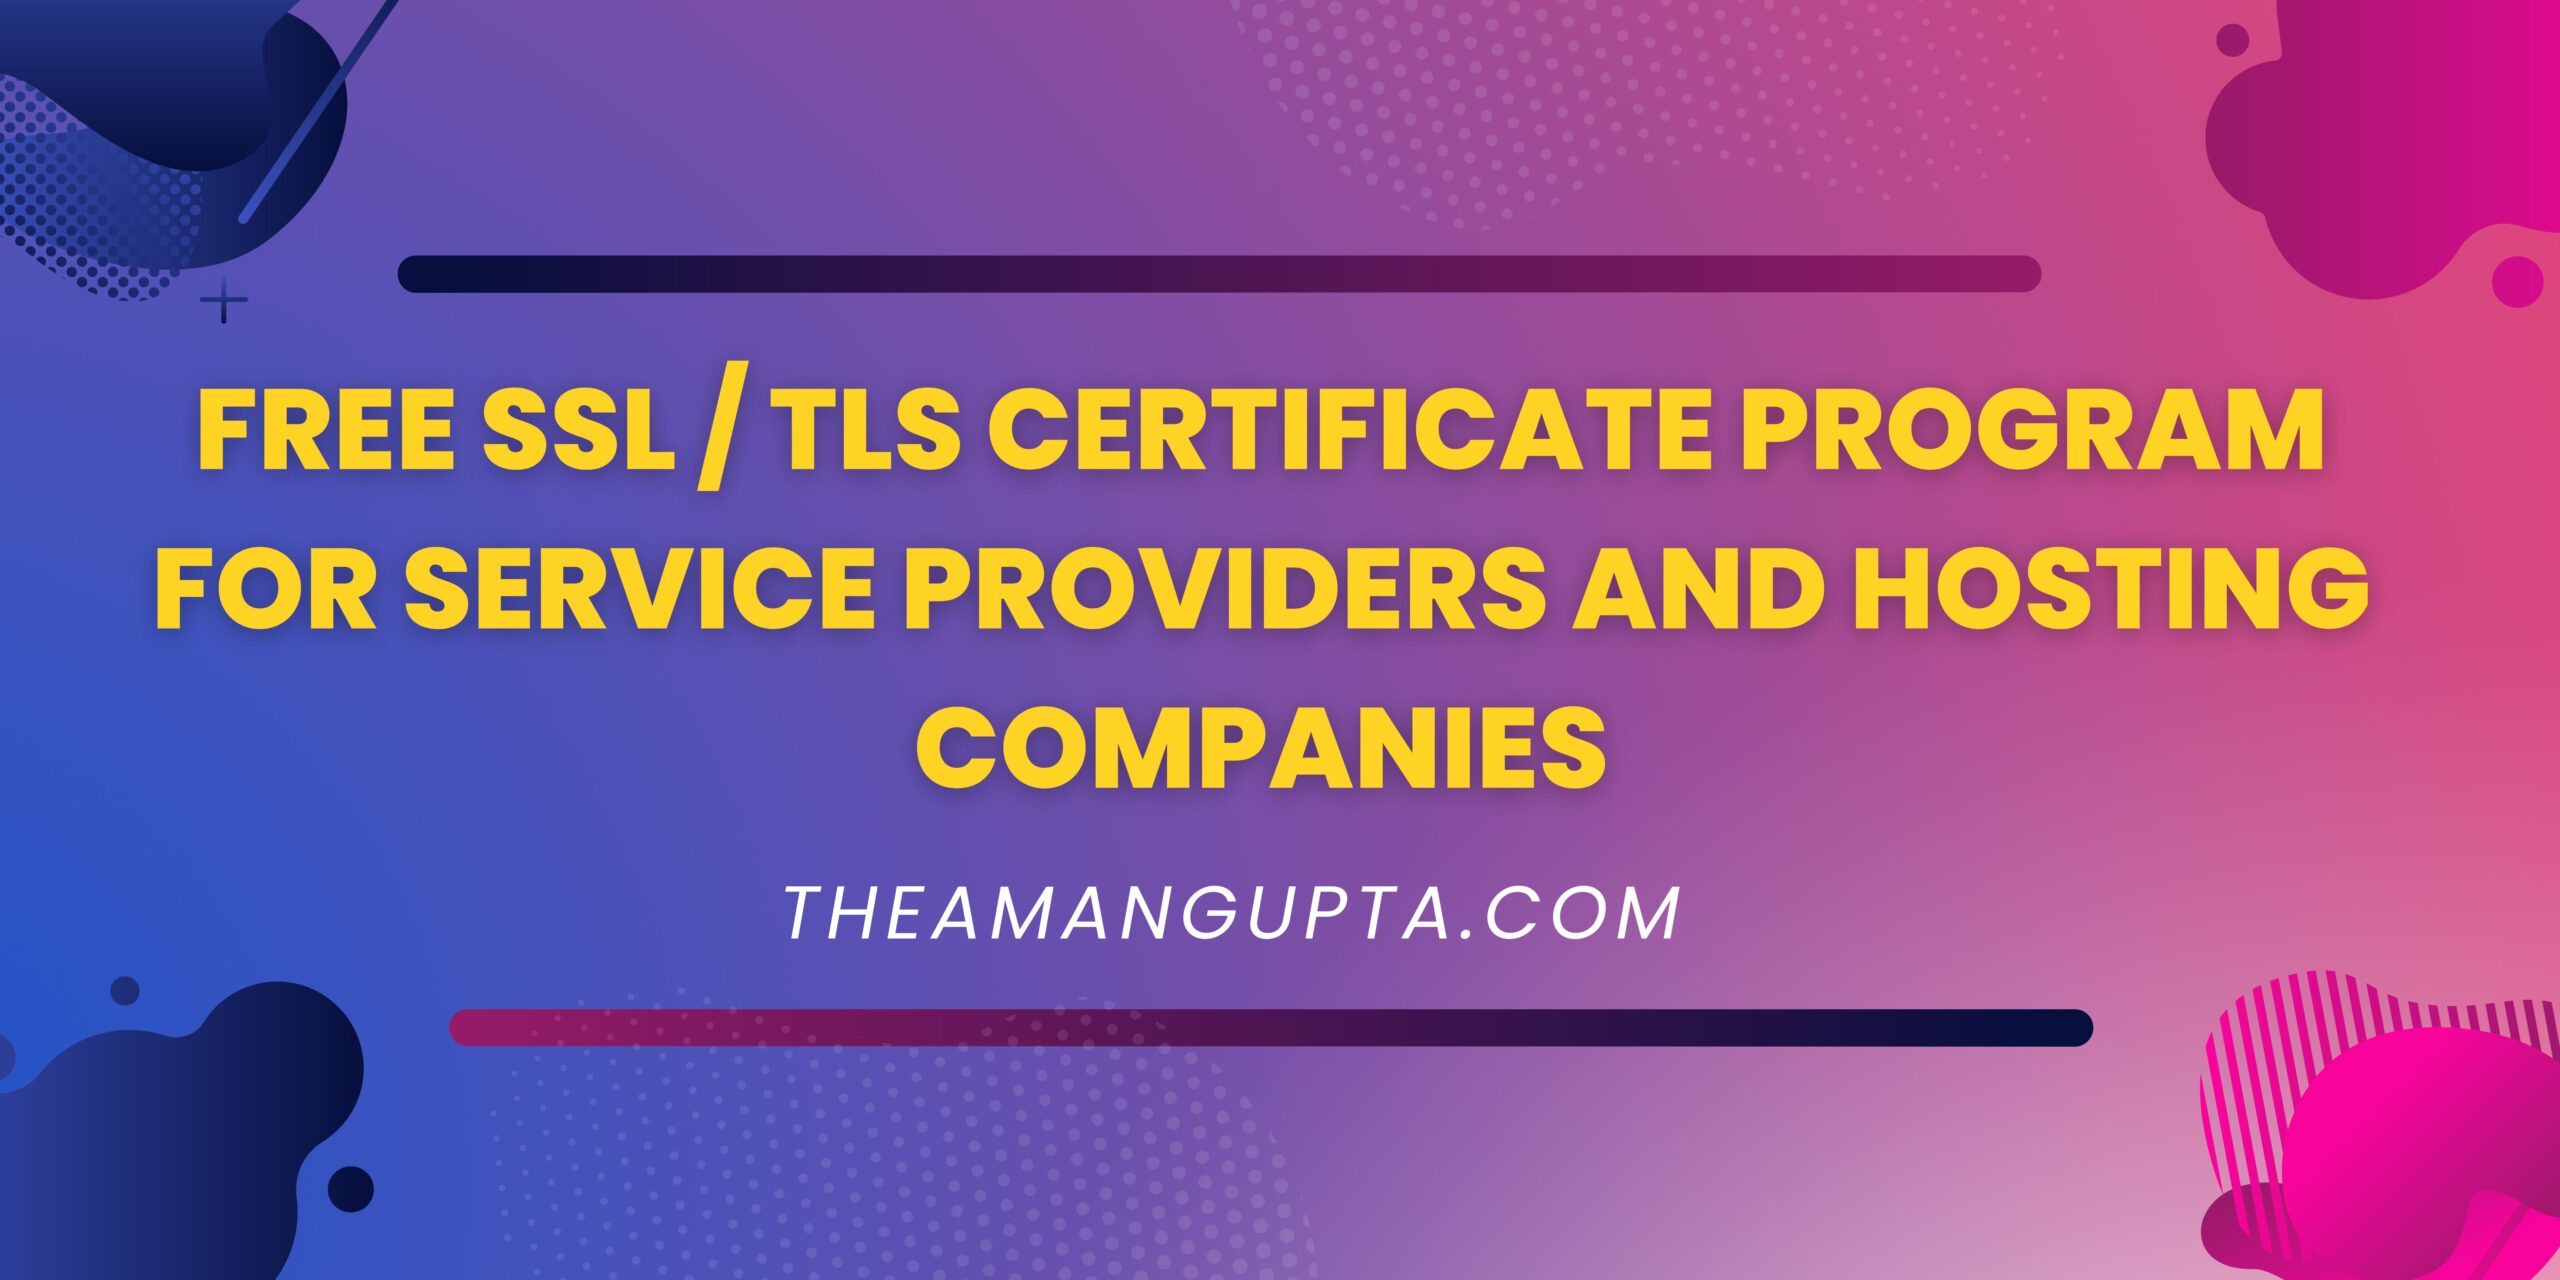 Free SSL / TLS Certificate Program For Service Providers And Hosting Companies|Hosting Companies|Theamangupta|Theamangupta